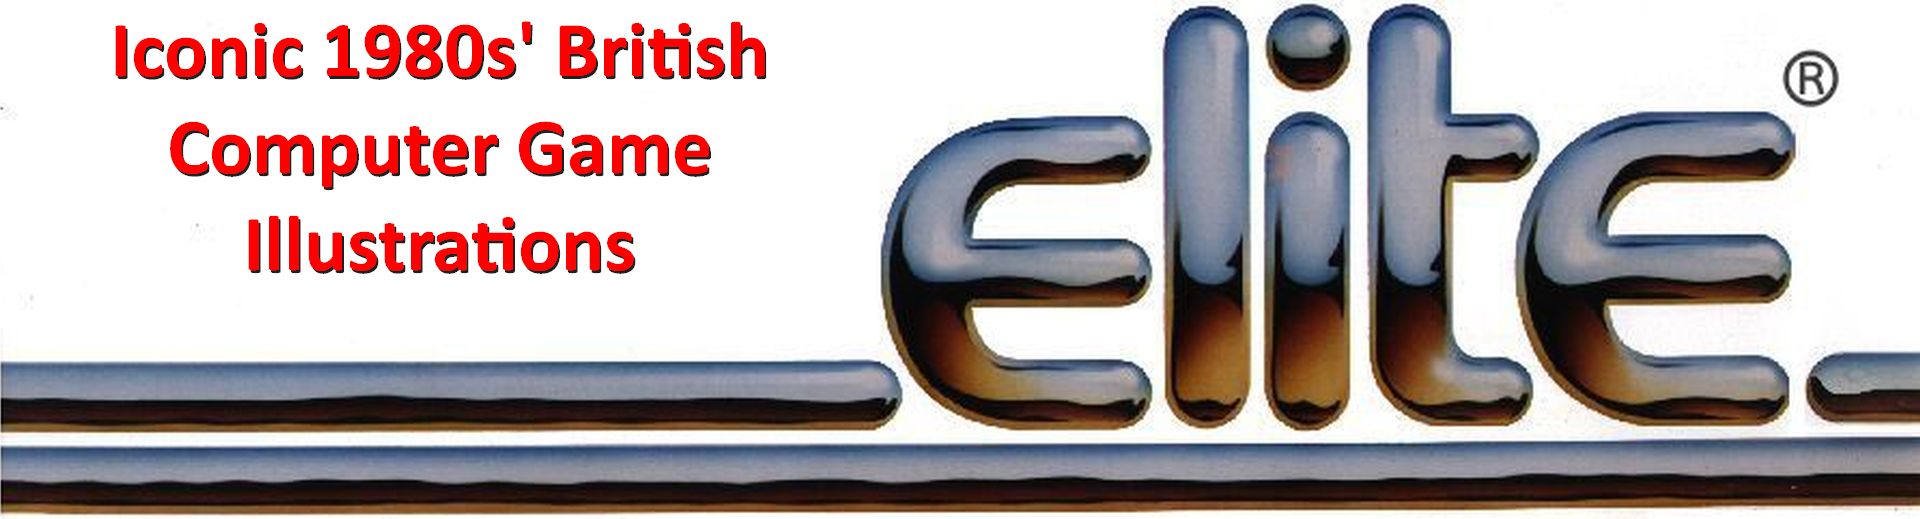 EliteSystemsLtd banner